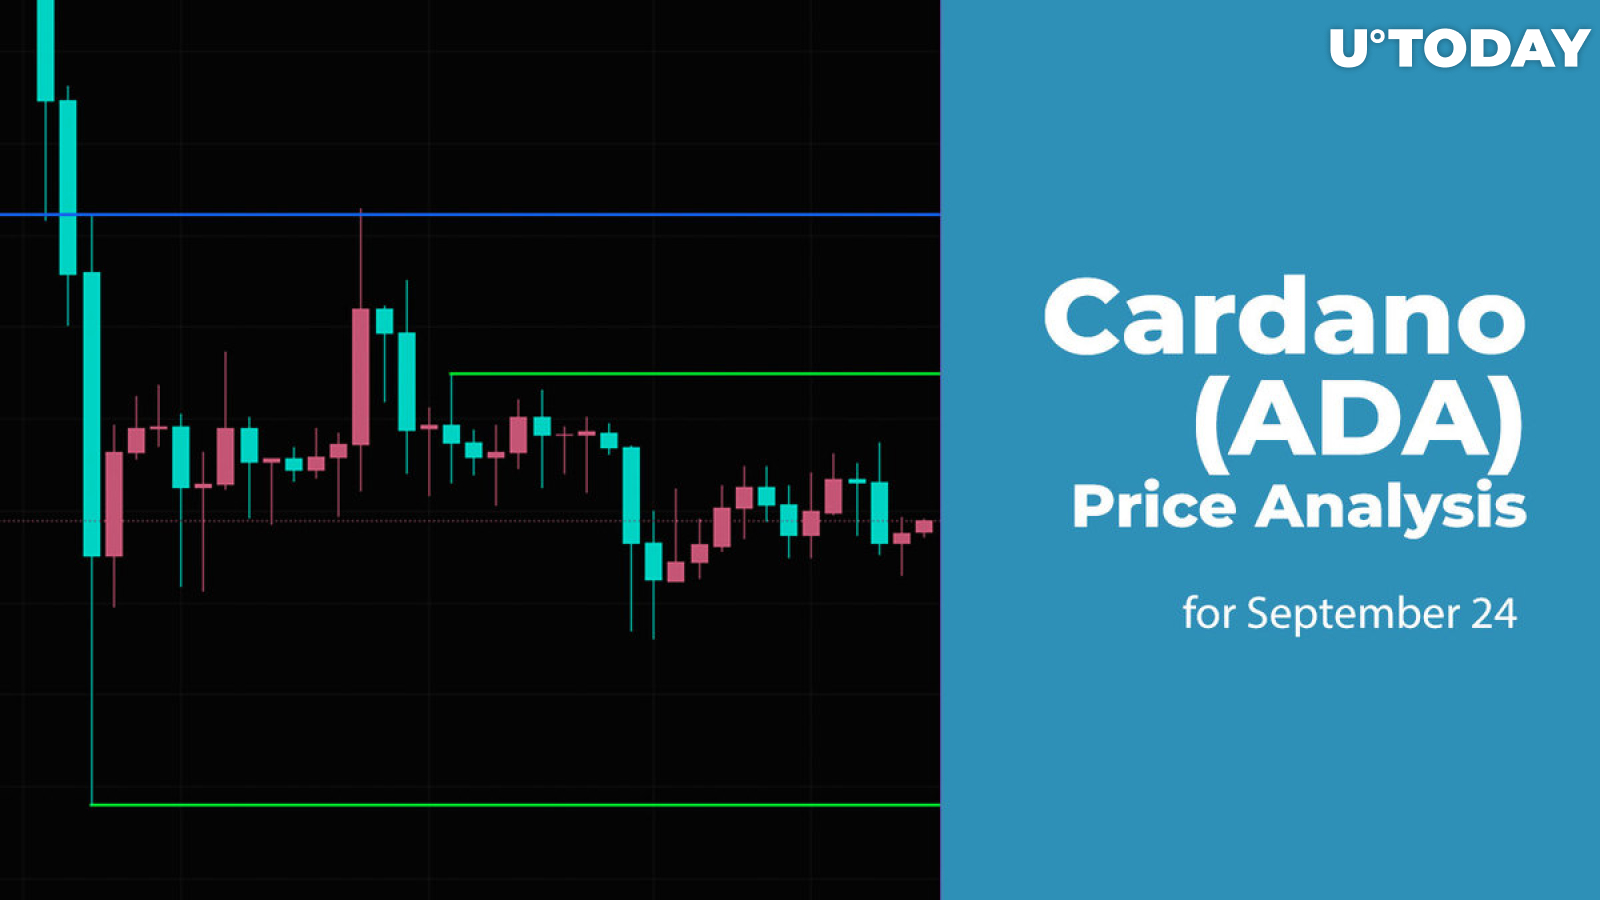 Cardano (ADA) Price Analysis for September 24